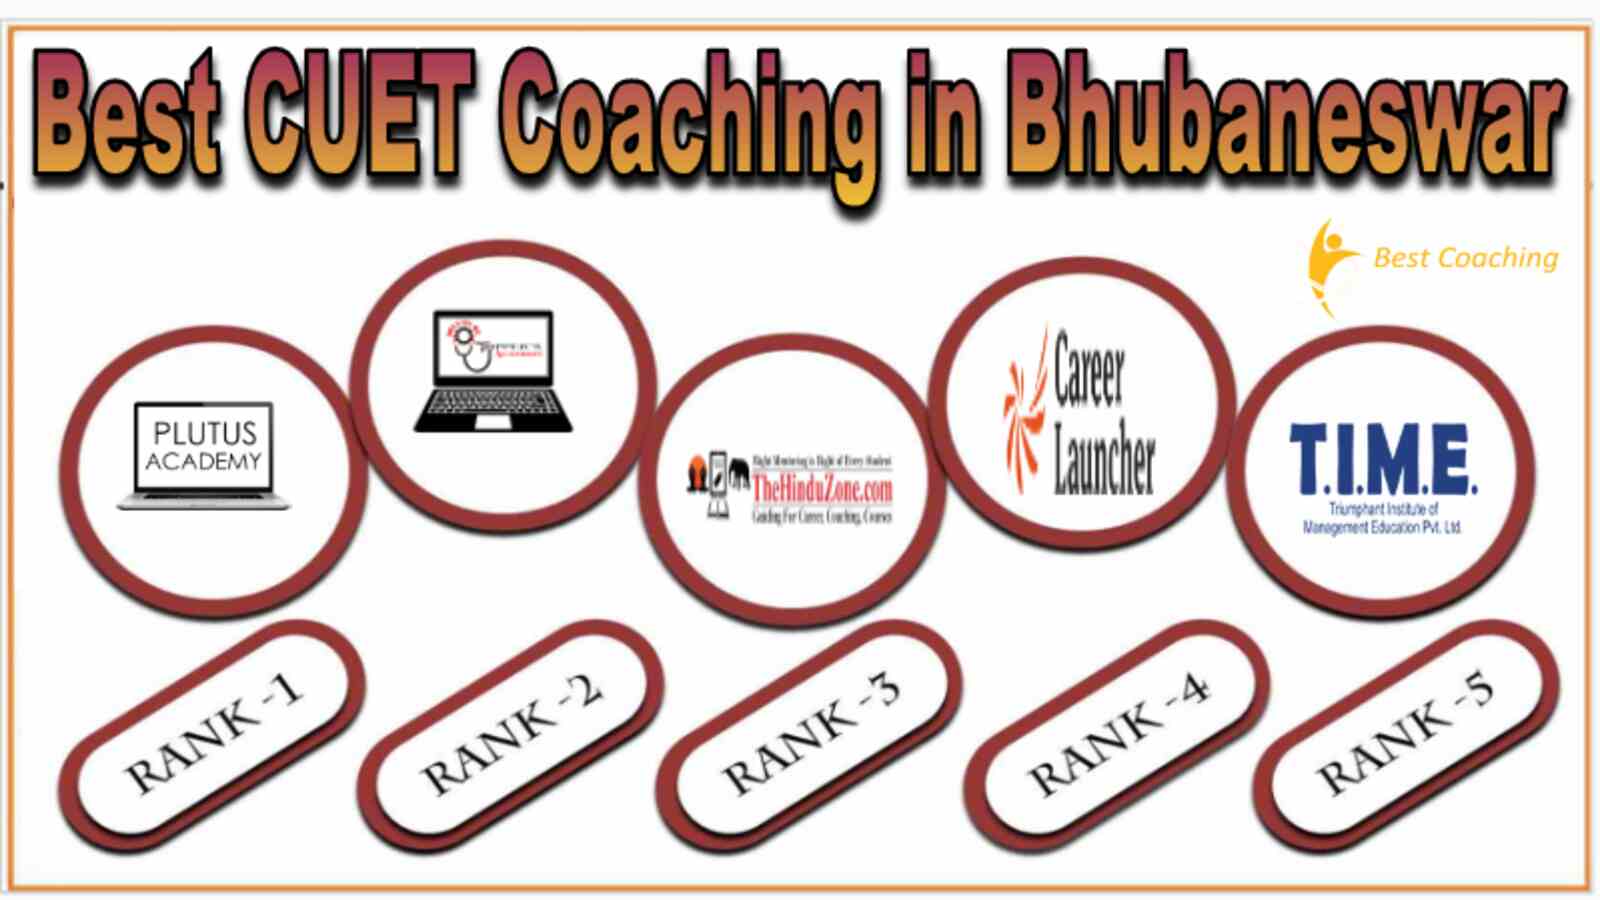 Best CUET Coaching in Bhubaneswar